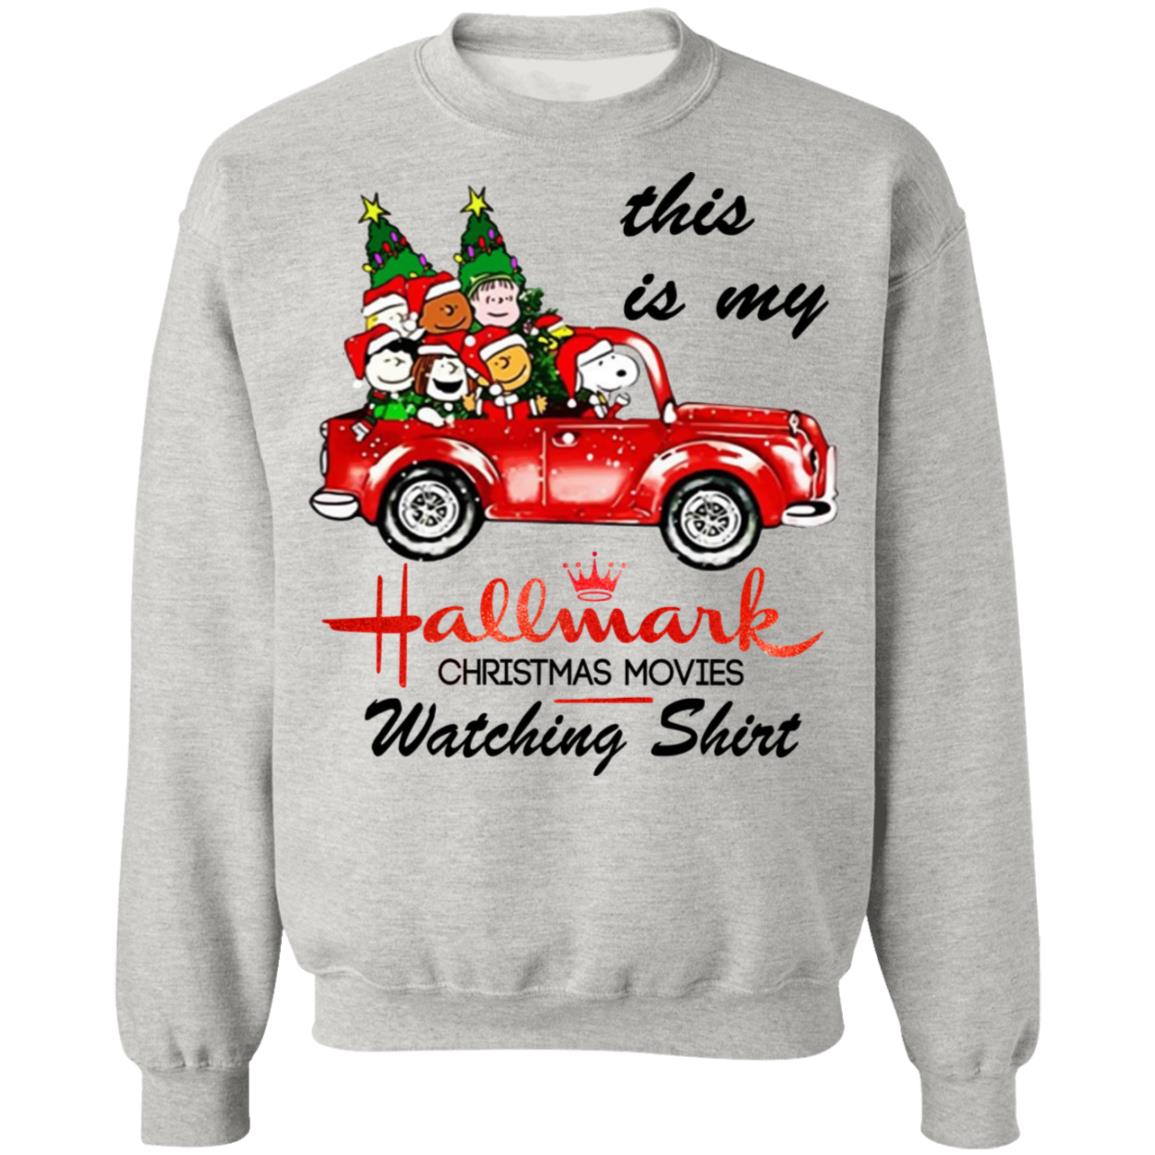 Hallmark Christmas Movie Sweatshirts